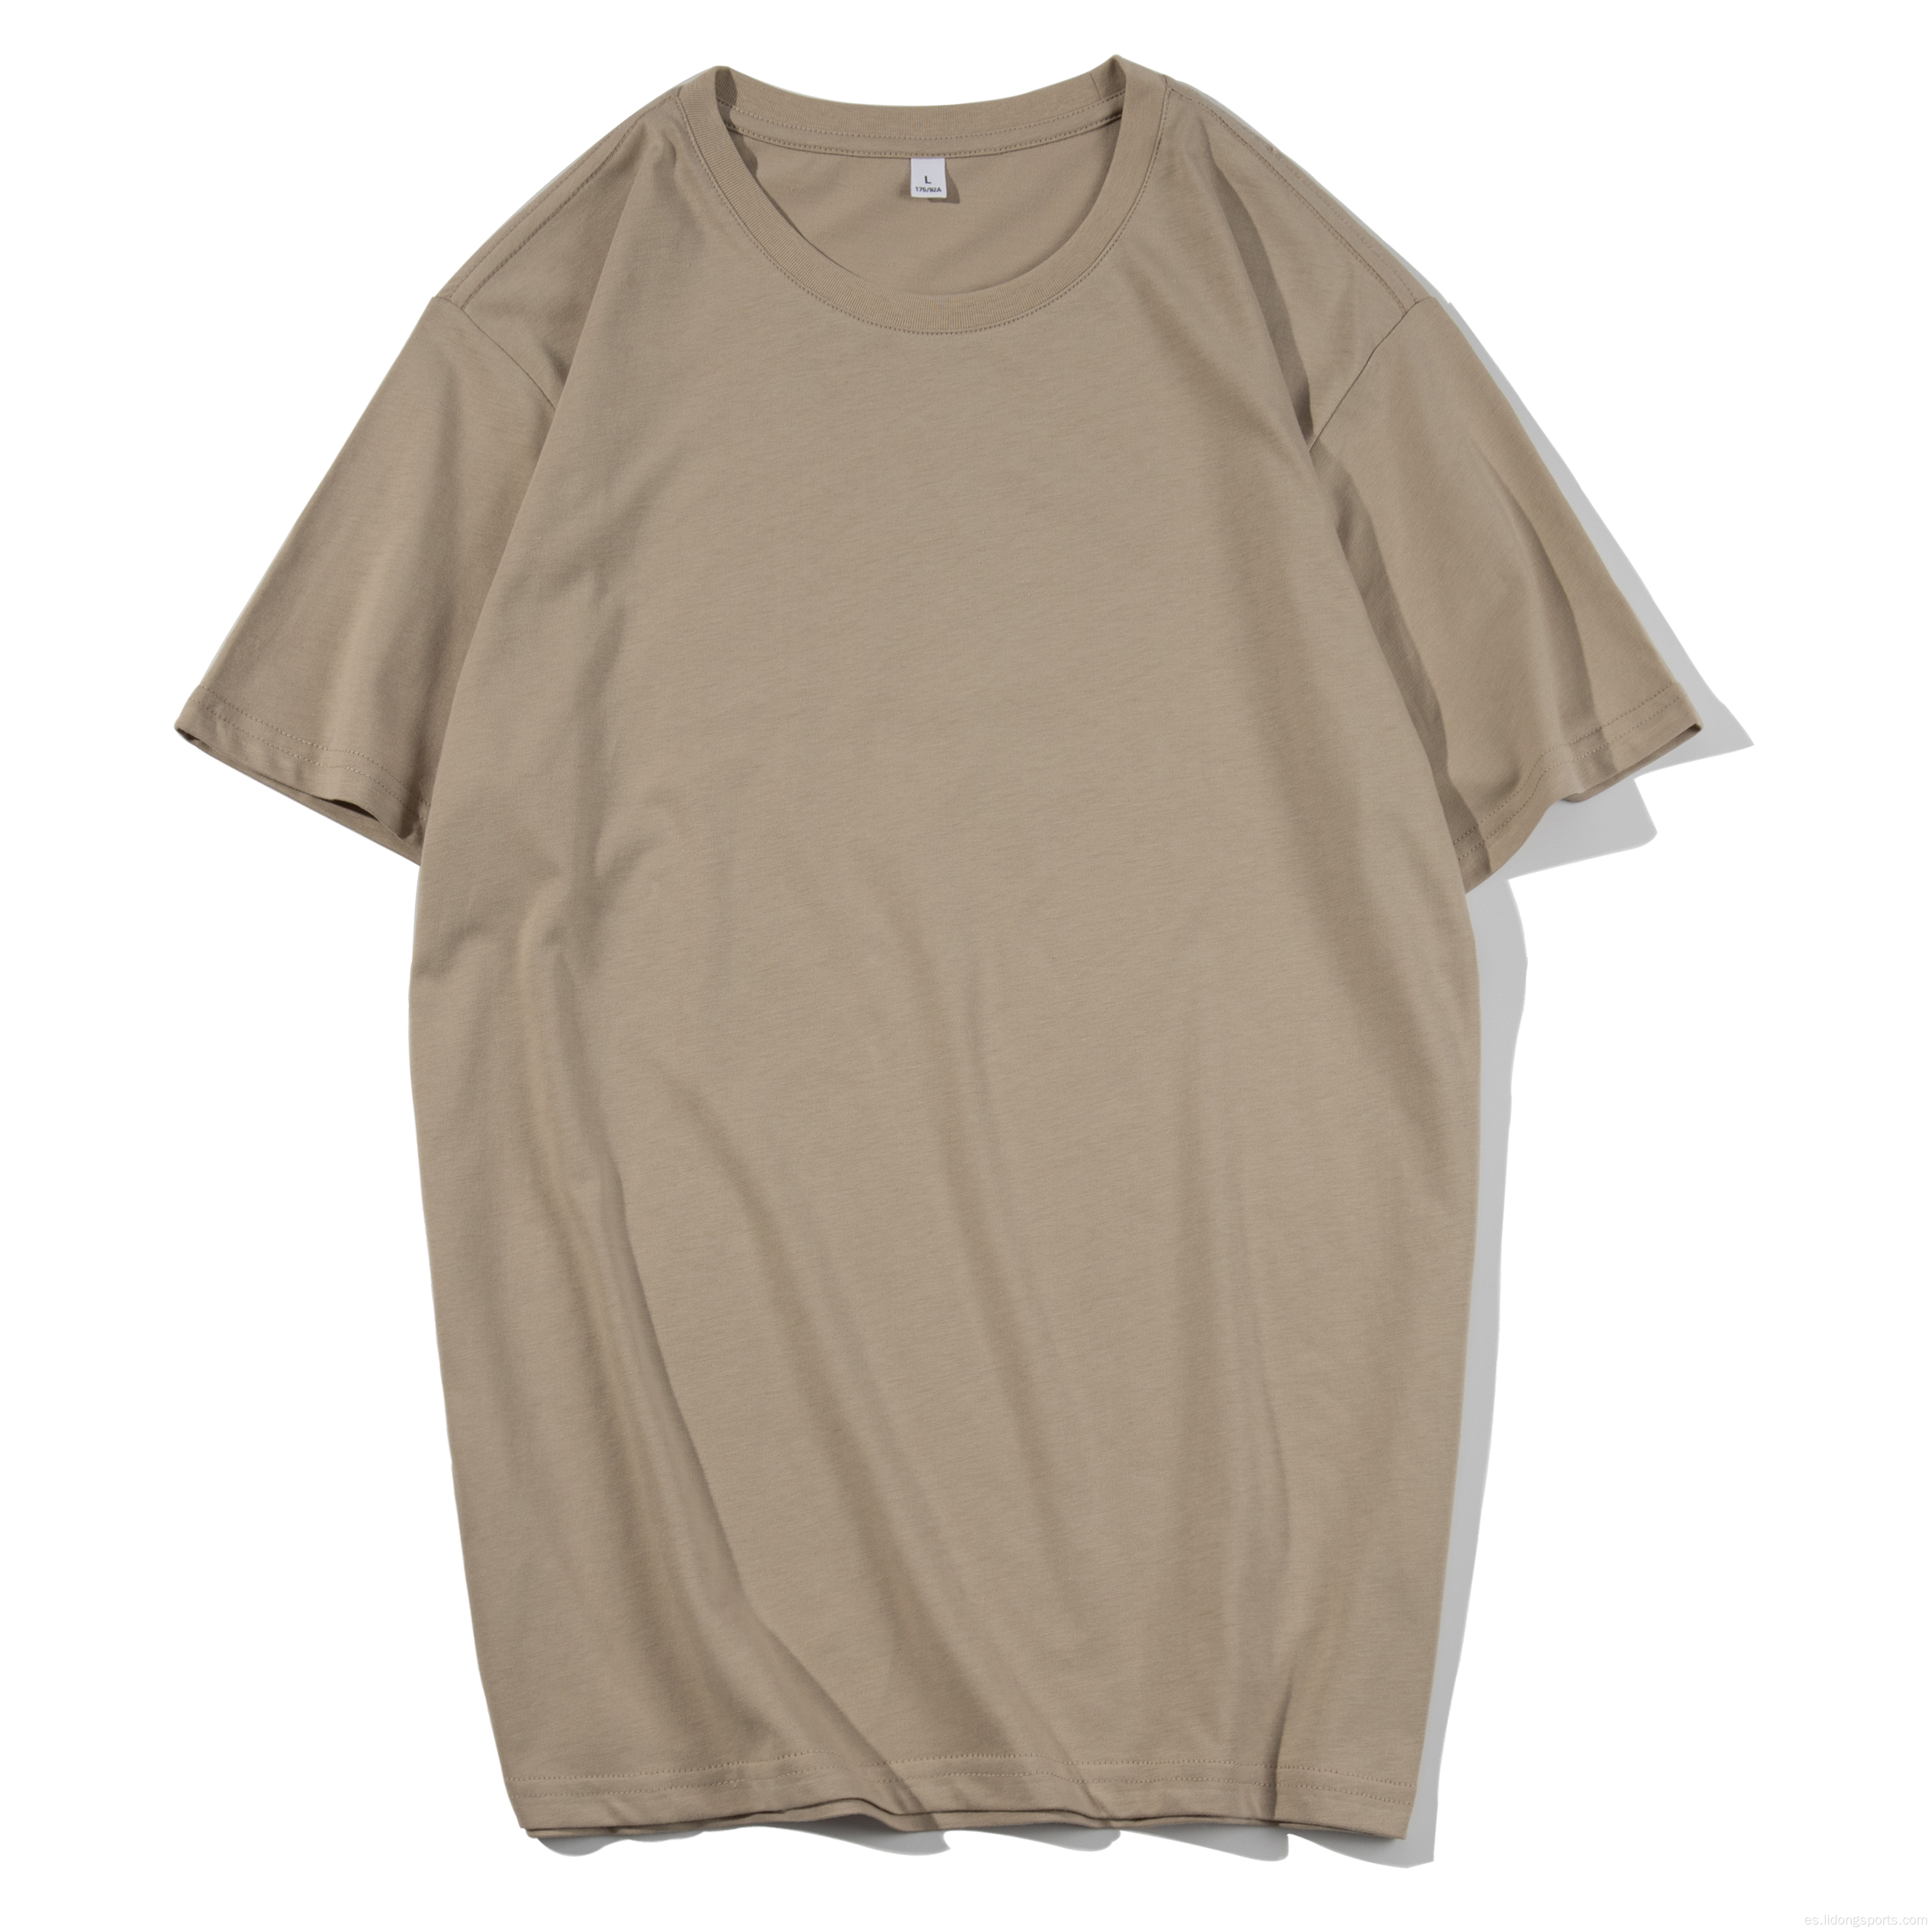 Camisetas para hombres de moda de algodón unisex unisex unisex